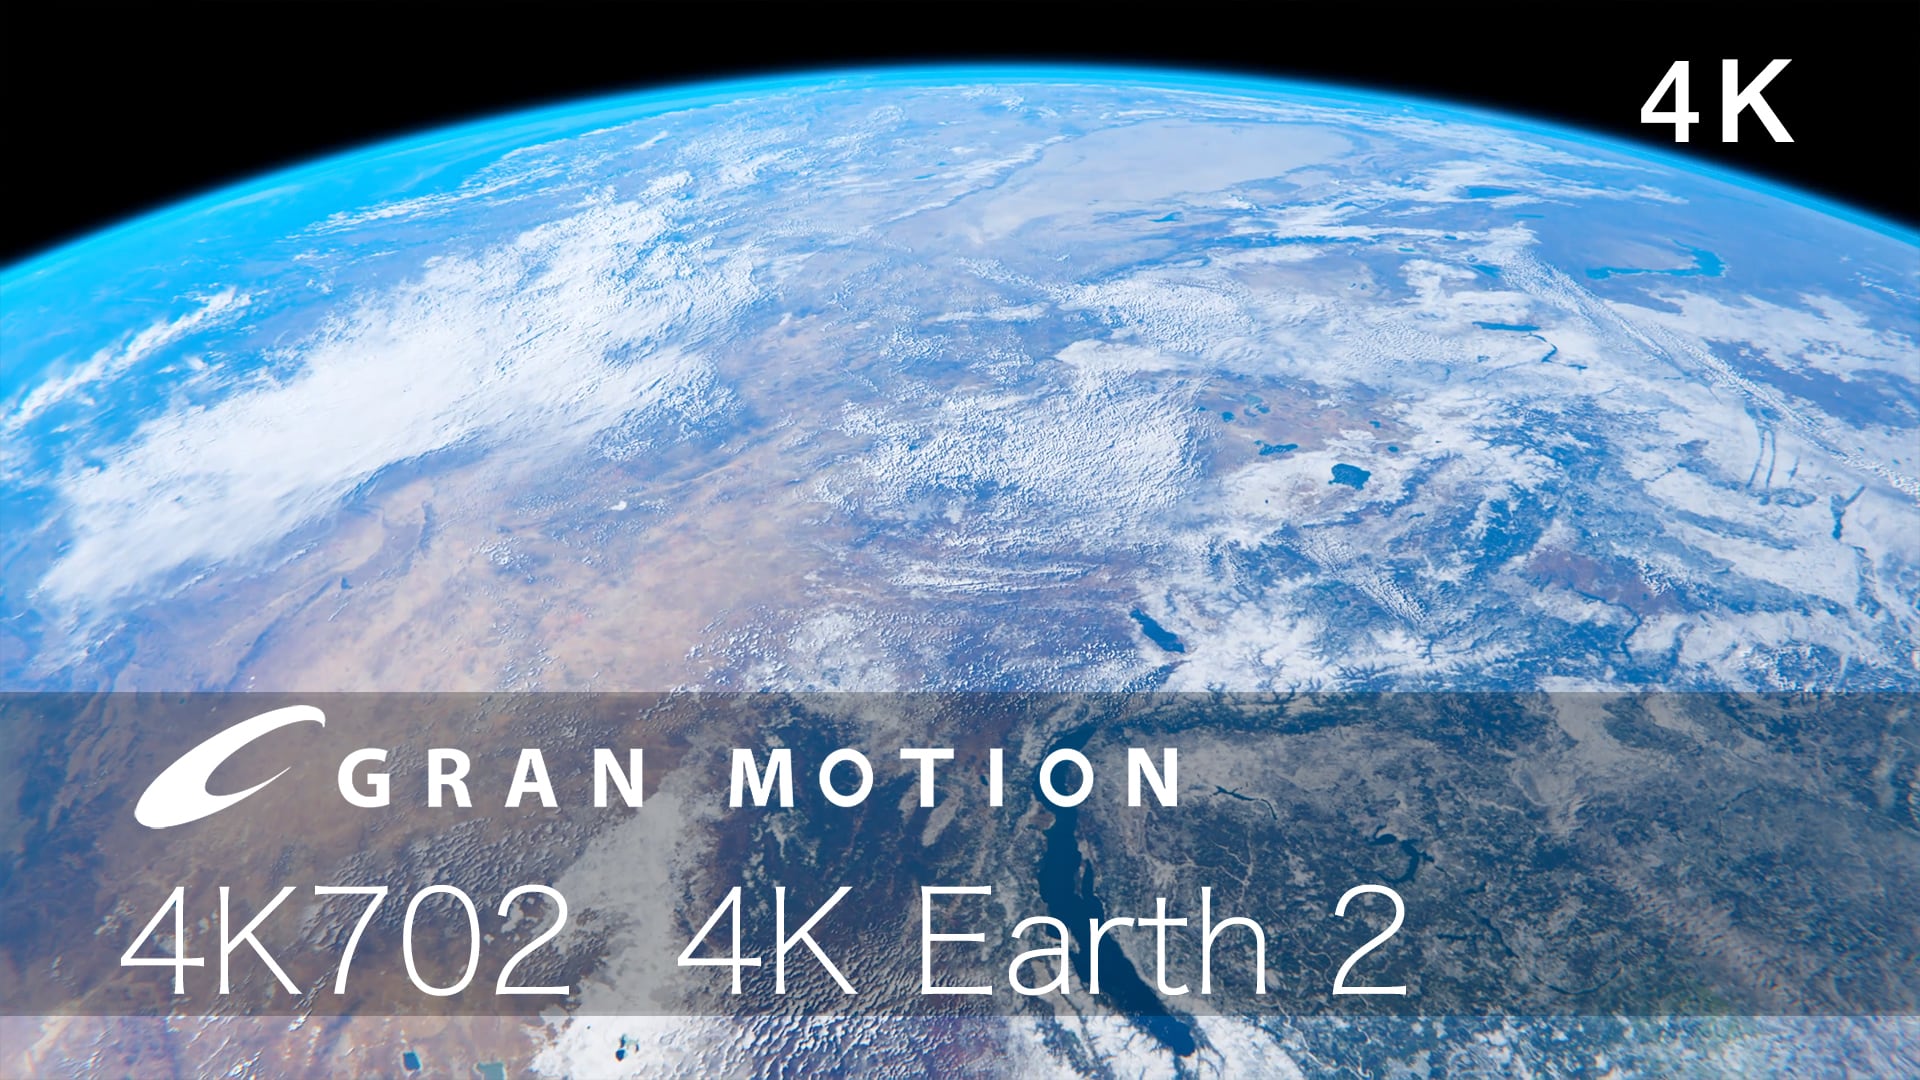 4k702dl 4k地球2 グランモーション 4k動画素材集 ダウンロード製品471mb Artzone Web Shop